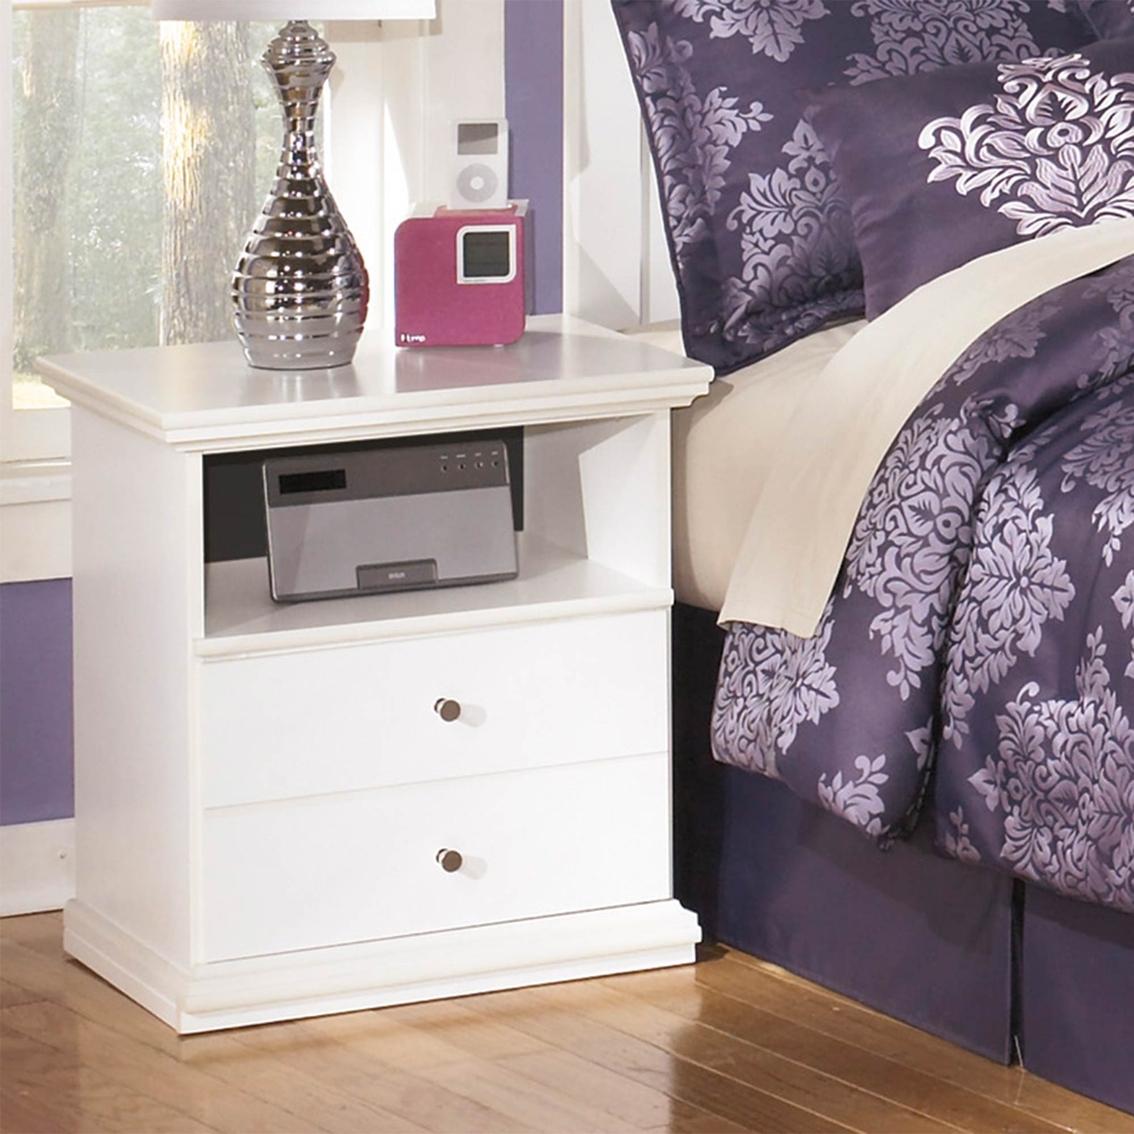 

    
Ashley Bostwick Shoals B139 Queen Size Panel Bedroom Set 3pcs in White
